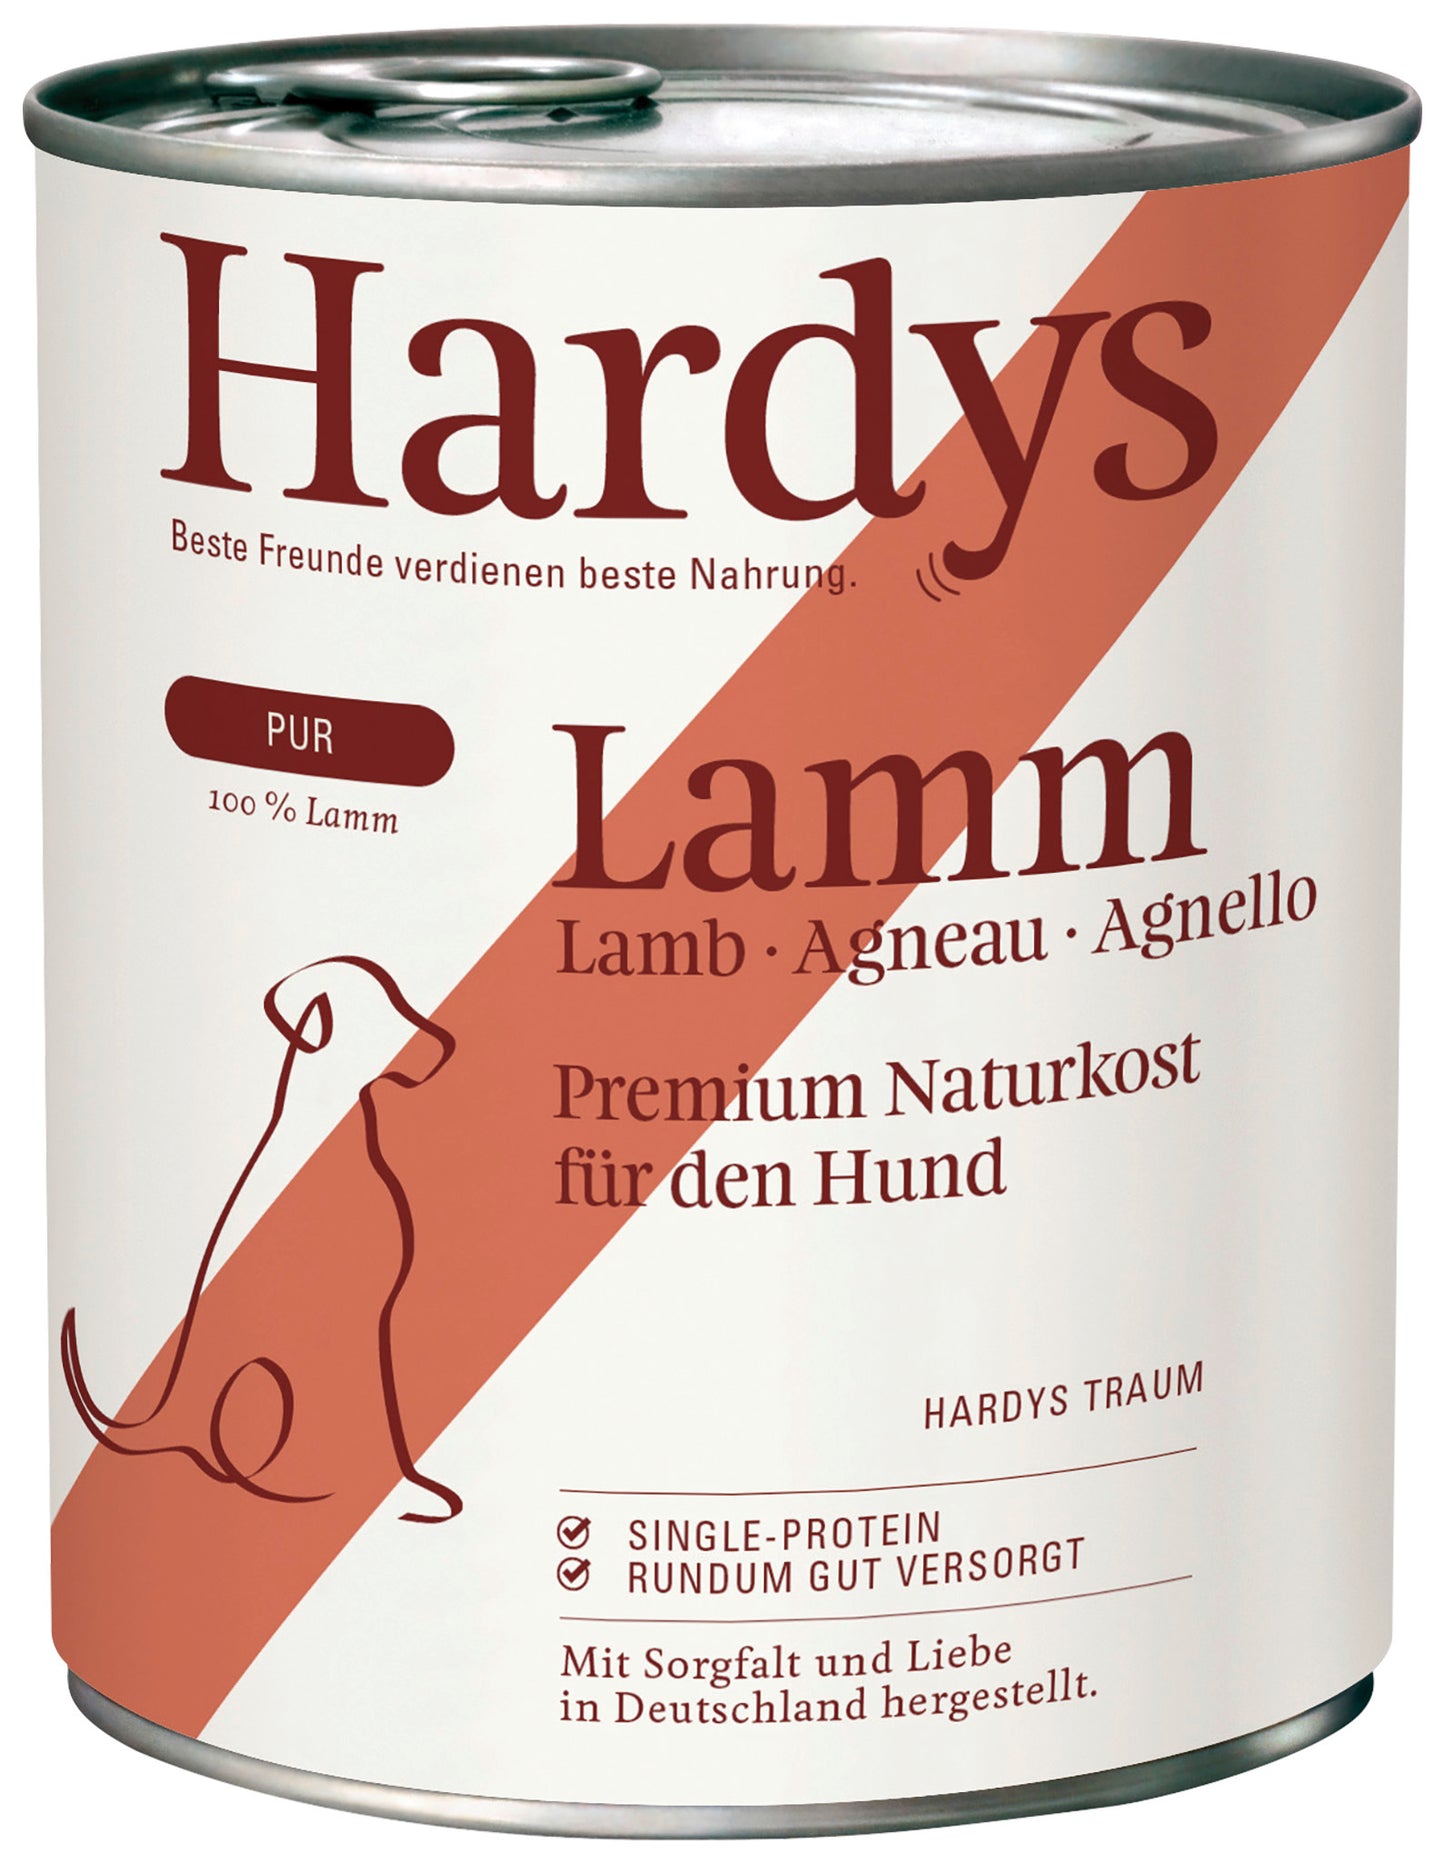 Hardy's Lamb - Pure 800g